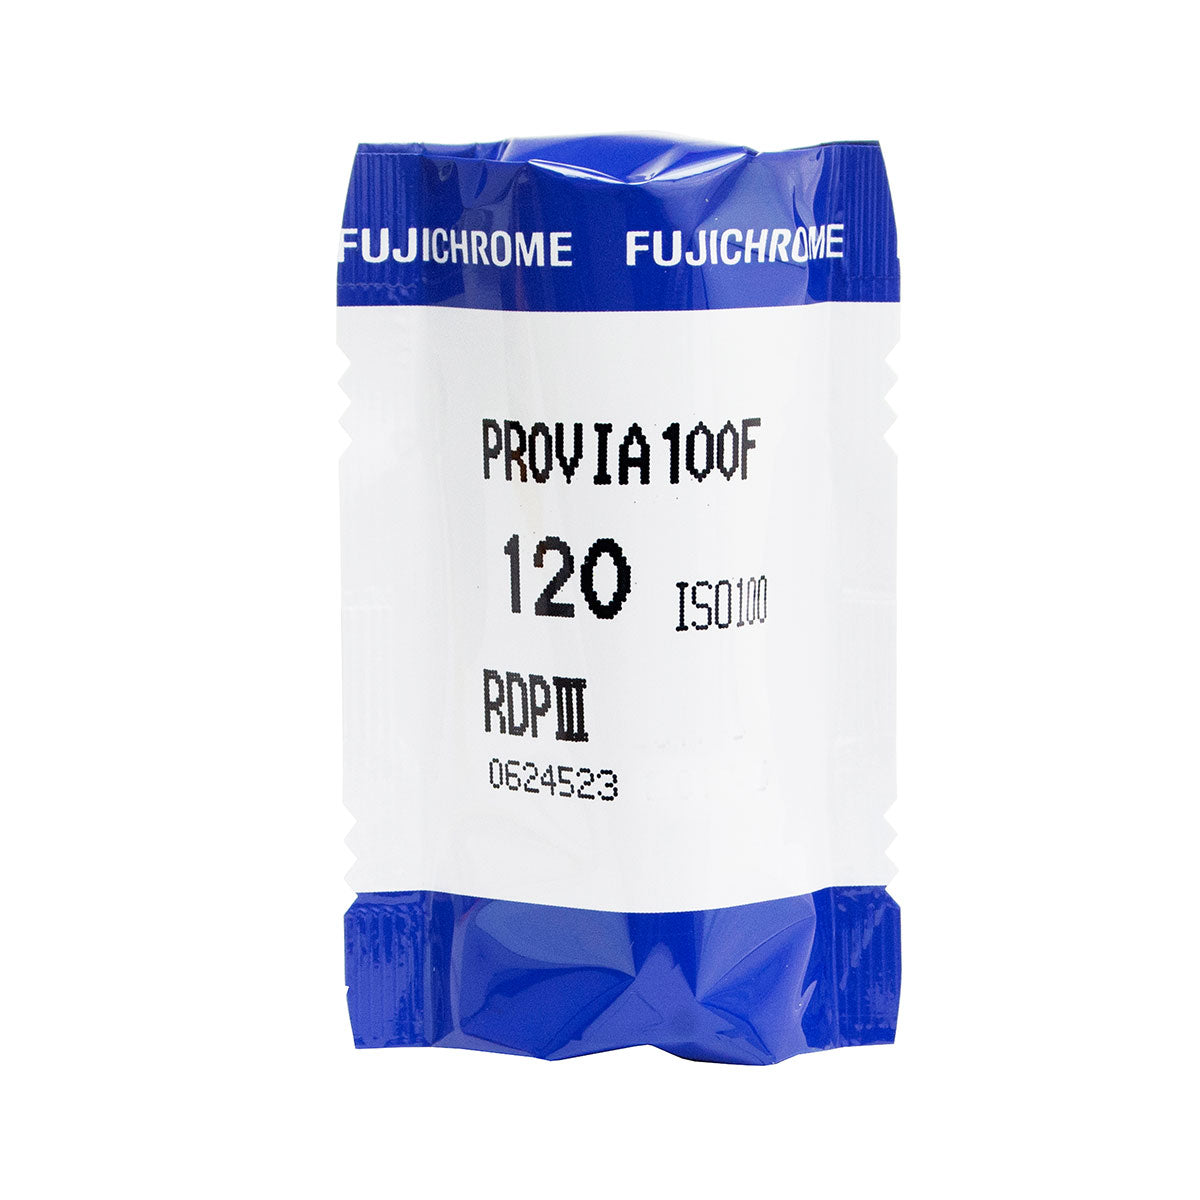 Fujichrome Provia 100F 120 Film (One Roll)